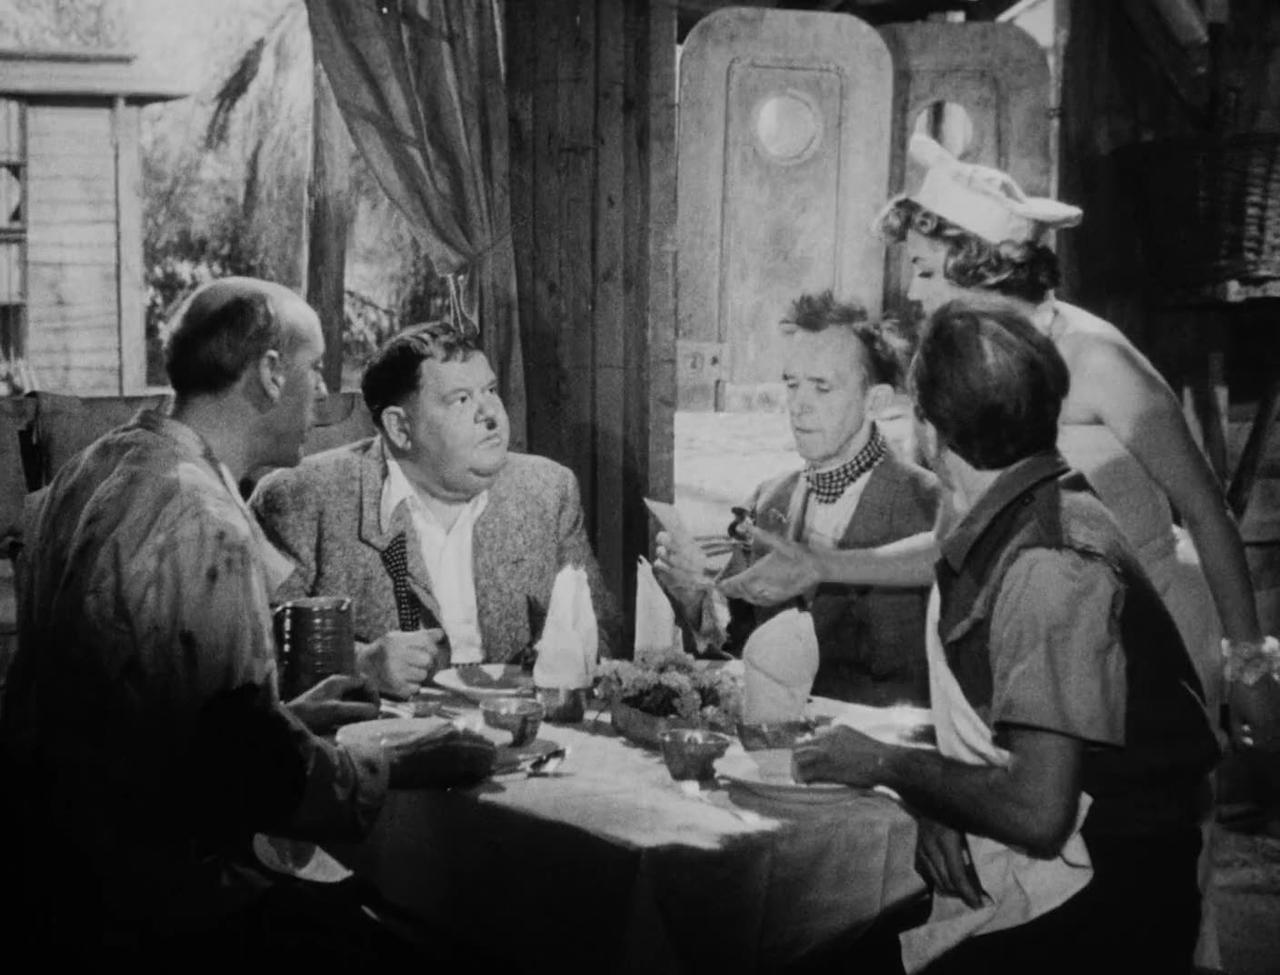 Atoll K / Utopia / Robinson Crusoeland - Laurel and Hardy's final film